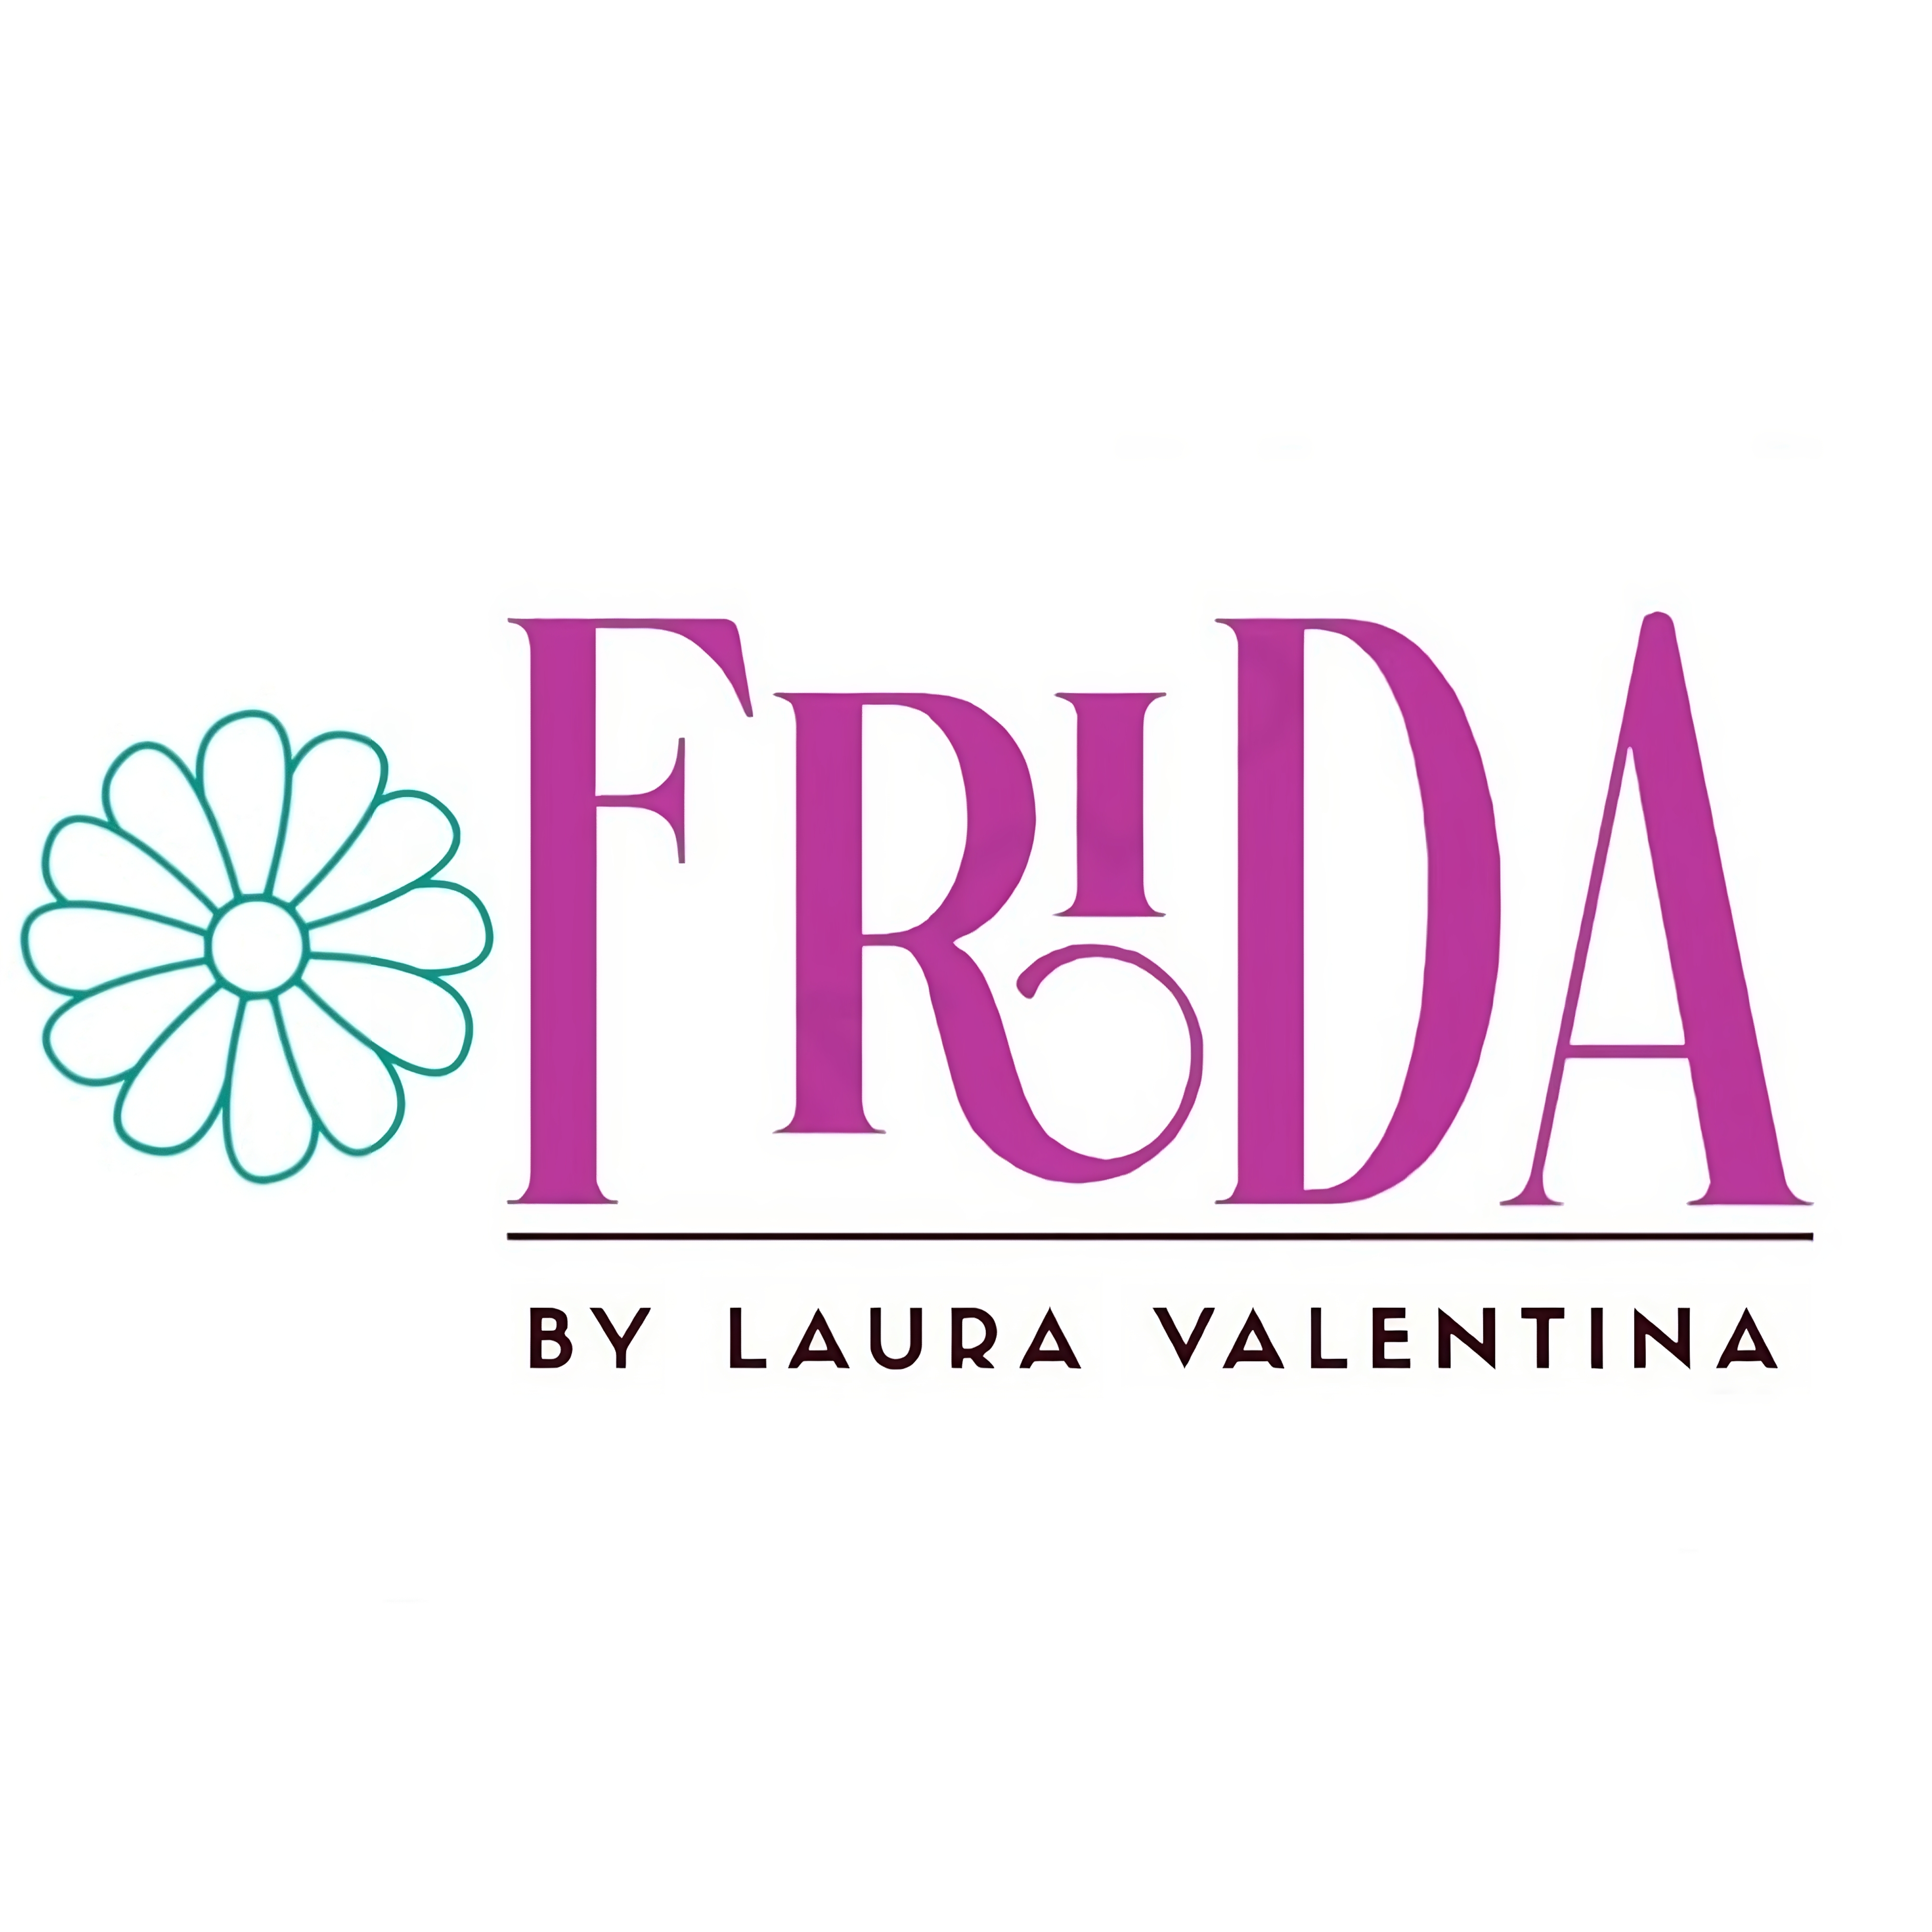 FRIDA BY LAURA VALENTINA